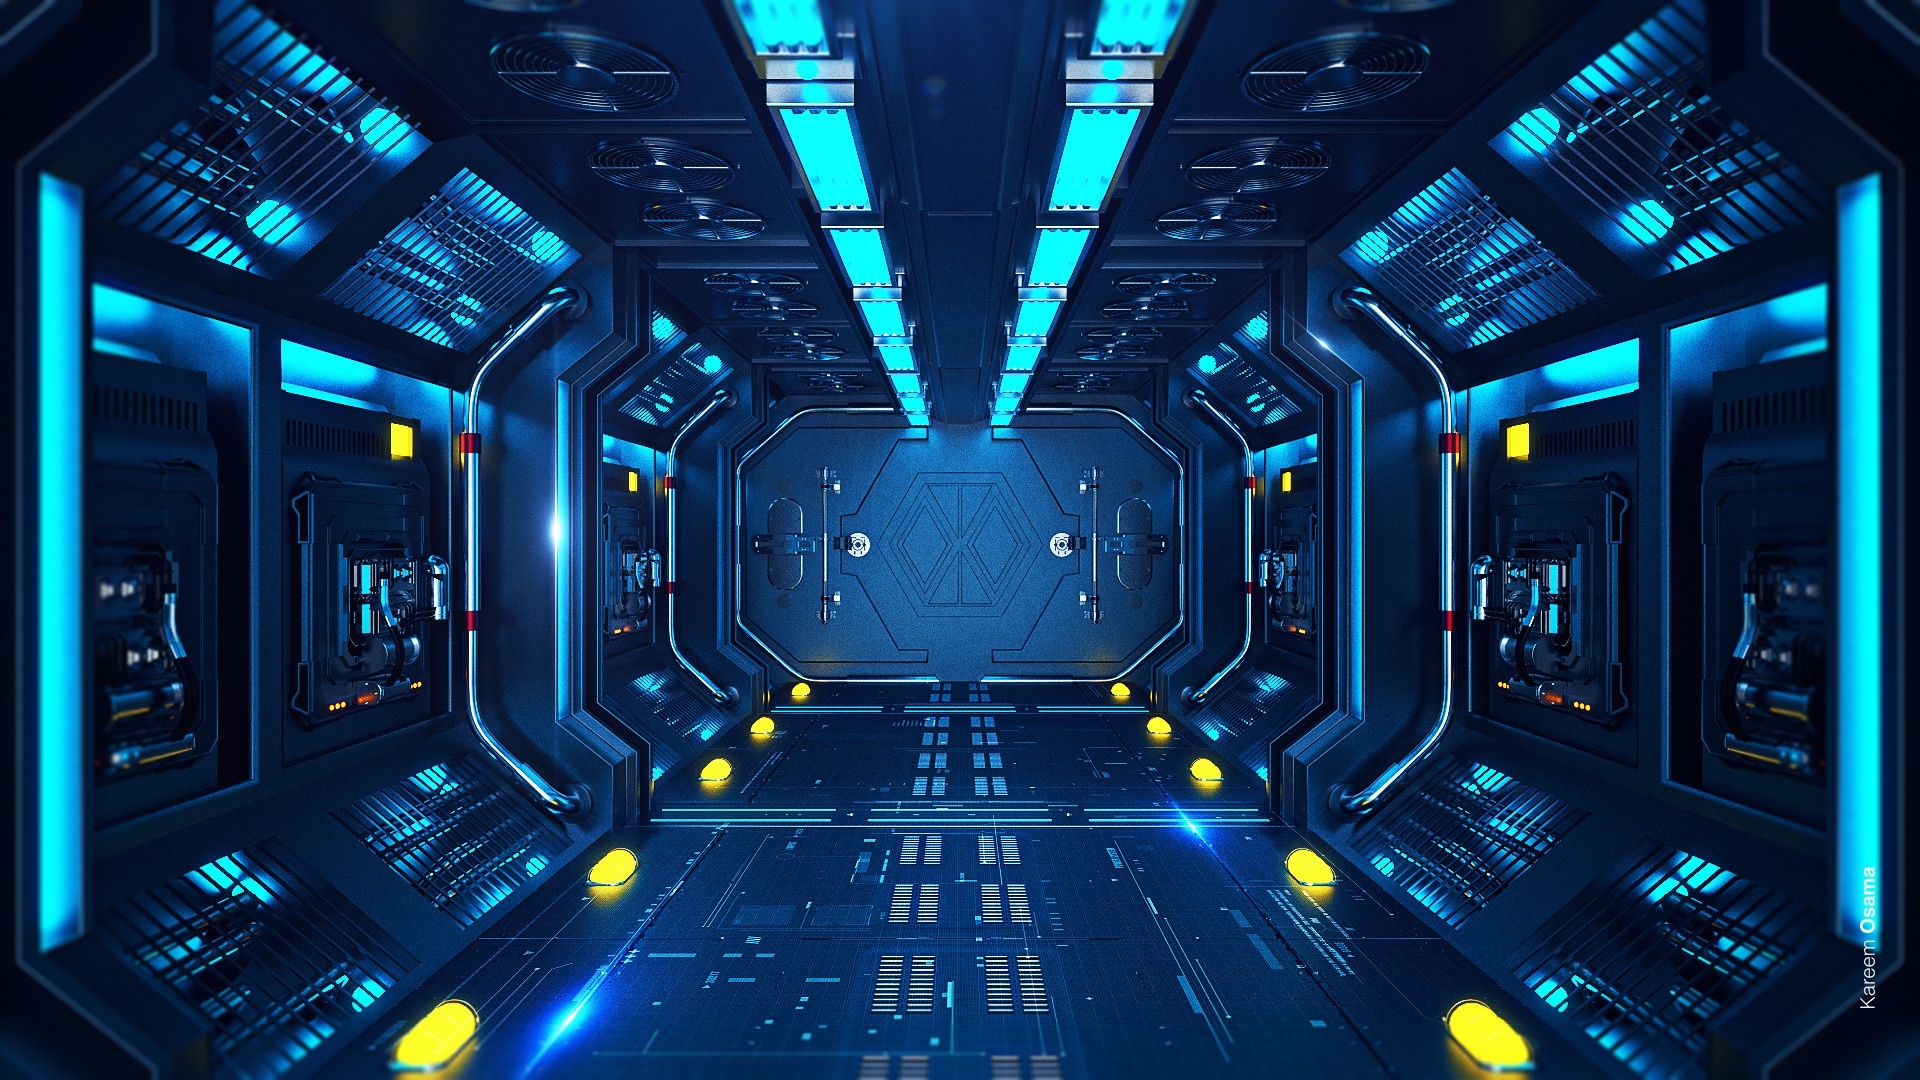 Space Tunnel wallpaper for desktop